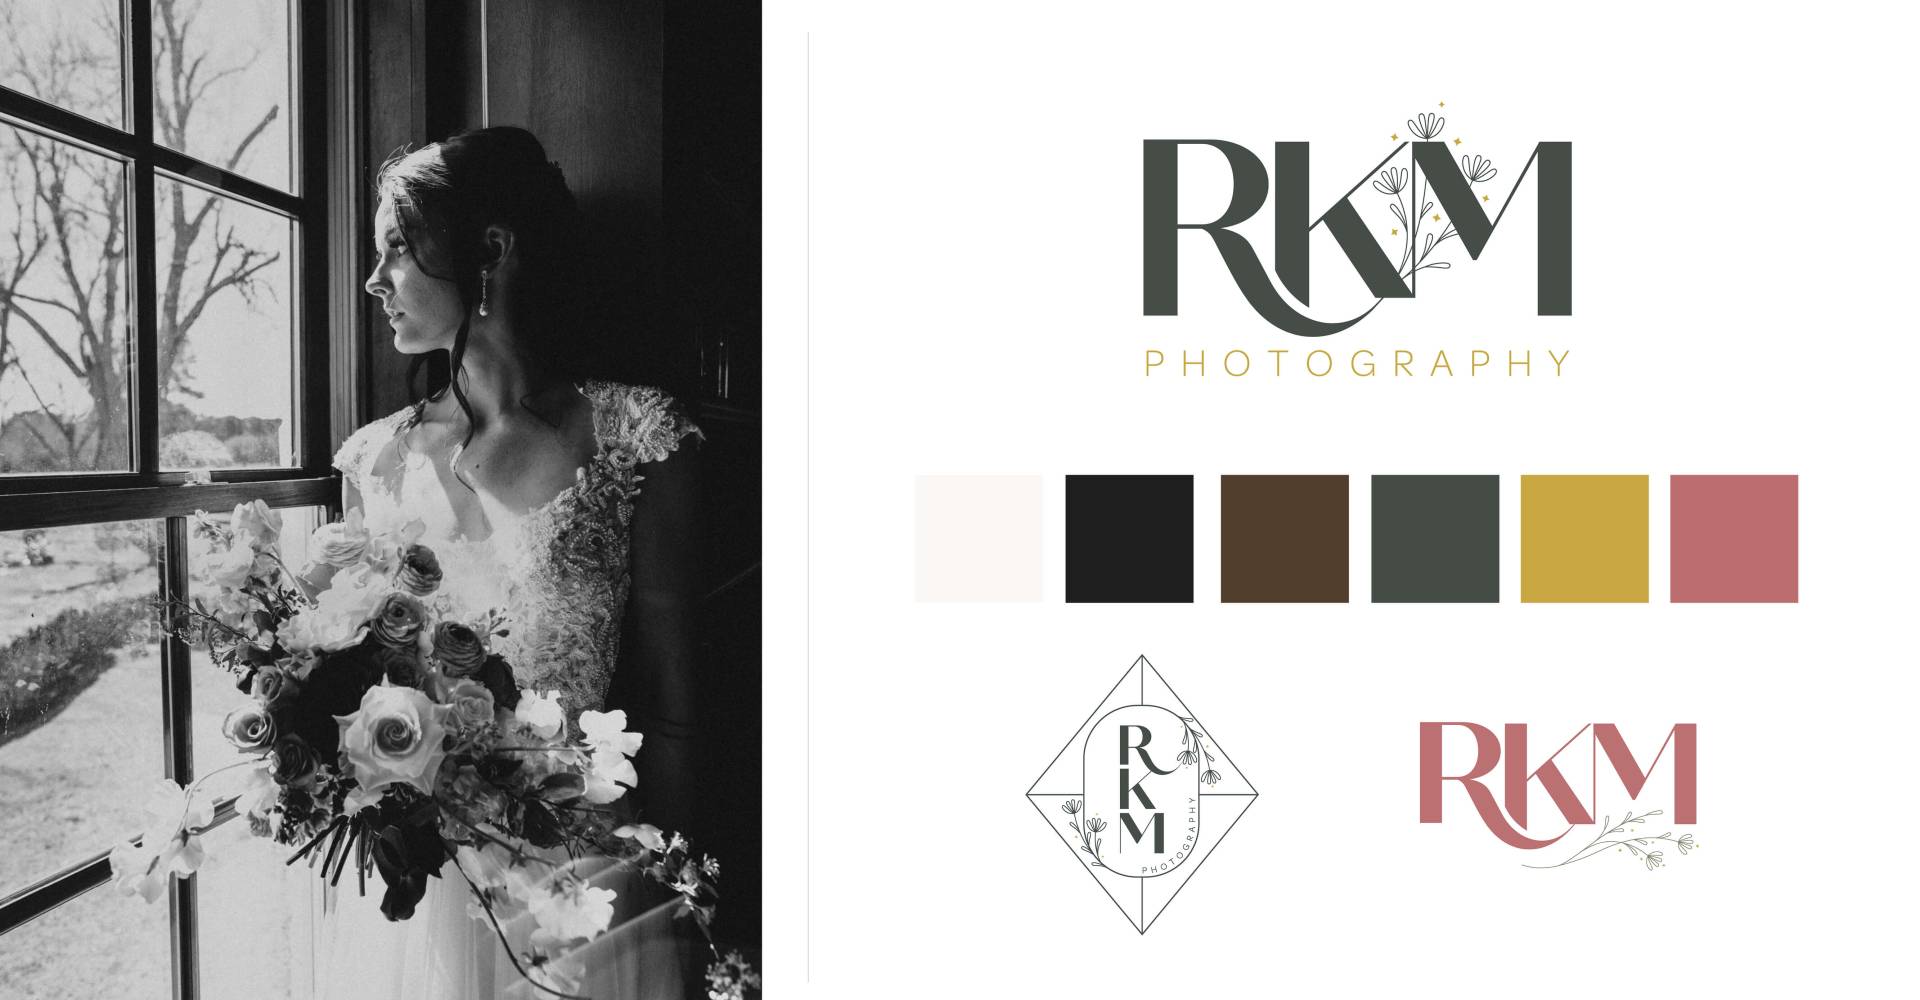 RKM Photography - Digital Marketing for Wedding Photographers - Brandlink Media Marketing Agency 2